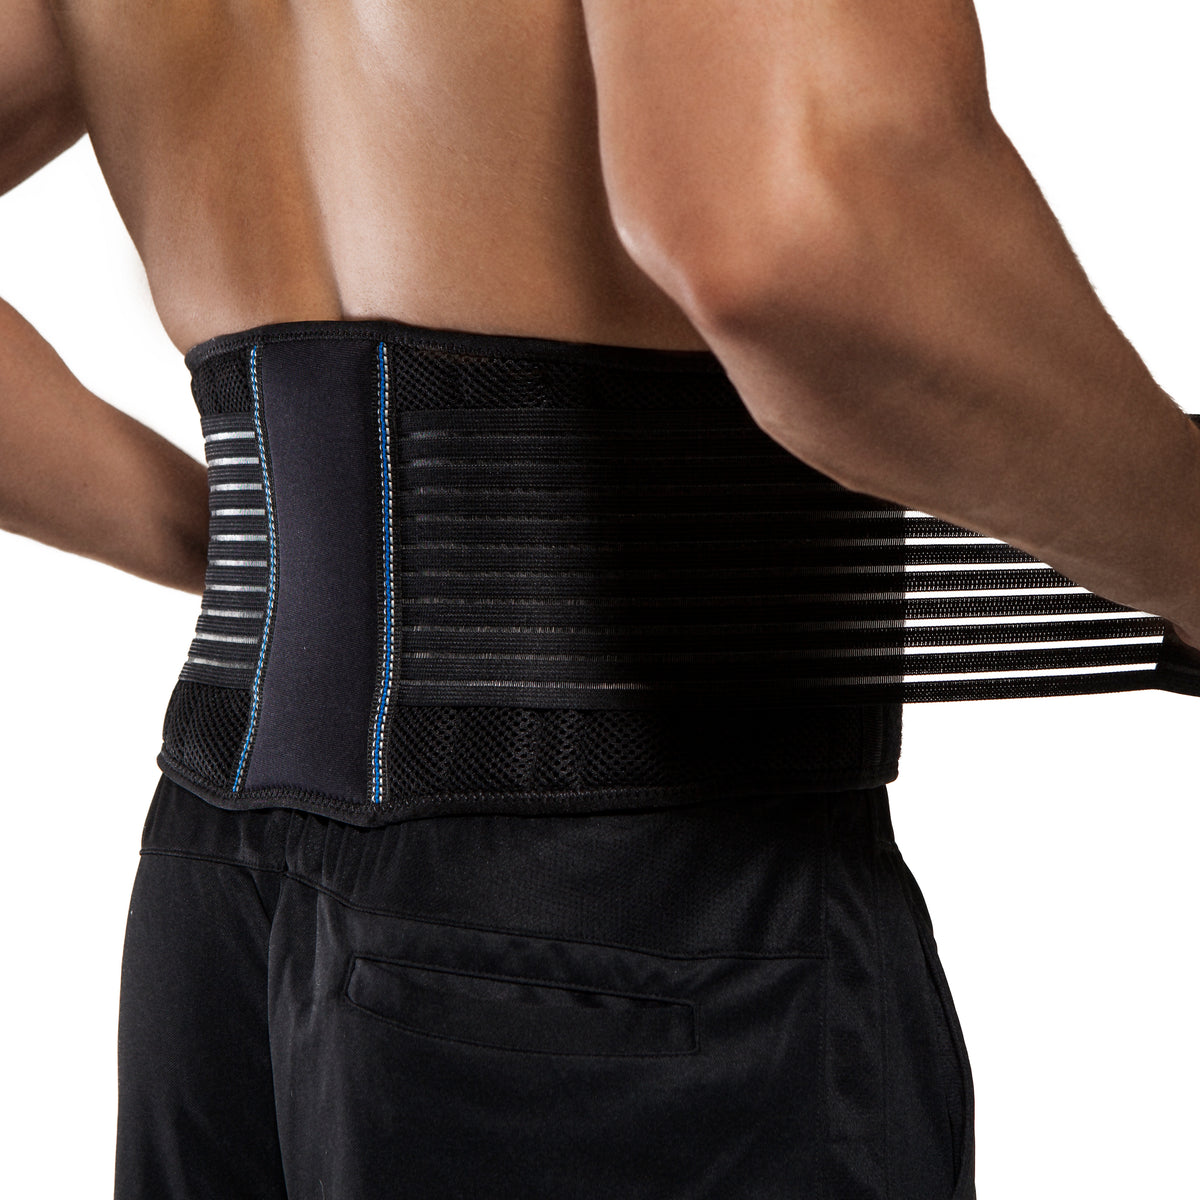 Sports Adjustable Back Brace Breathable Lumbar Support Belt for